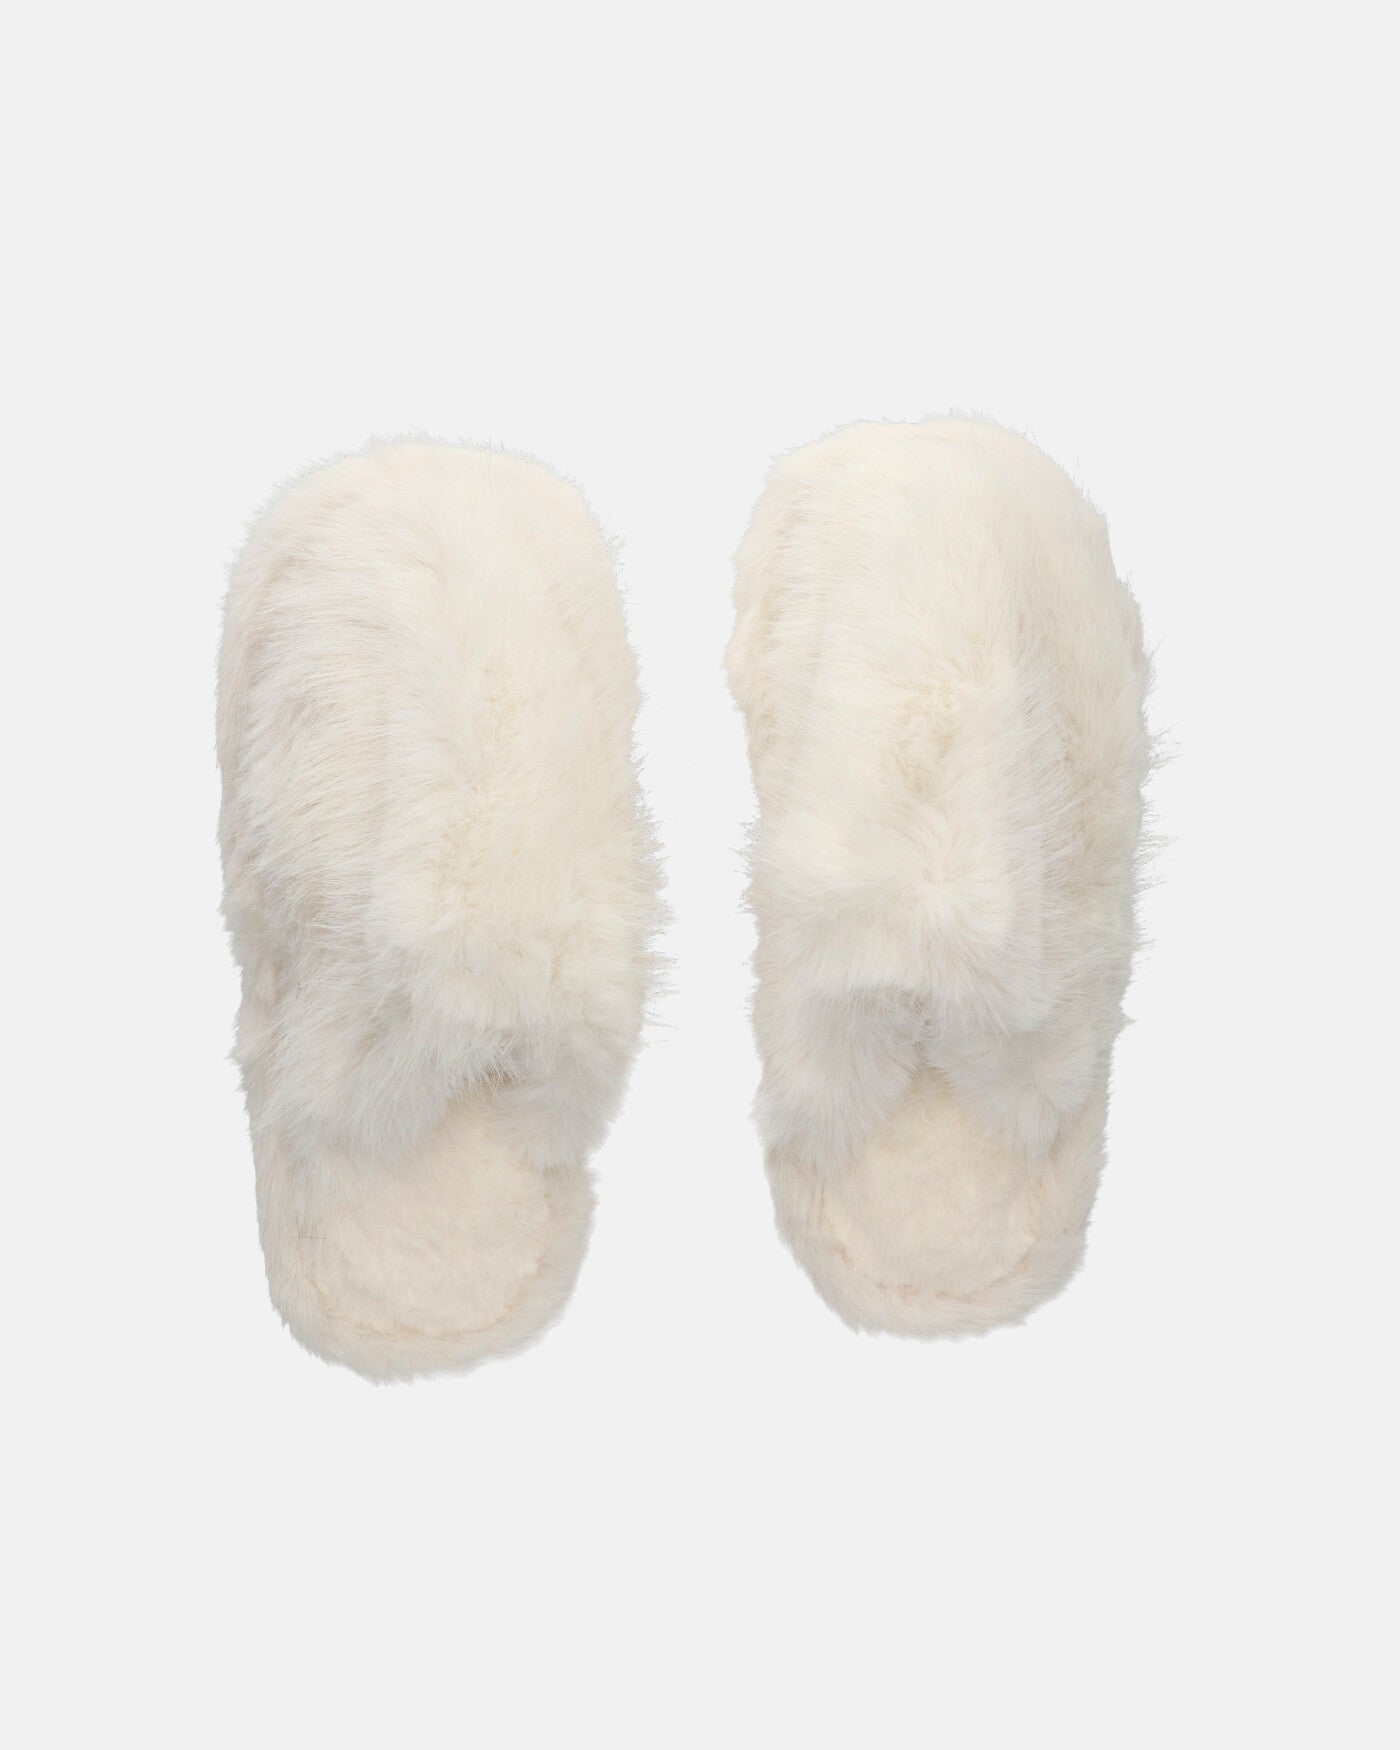 NOARA - pantofole in pelliccia bianca chiuse in punta